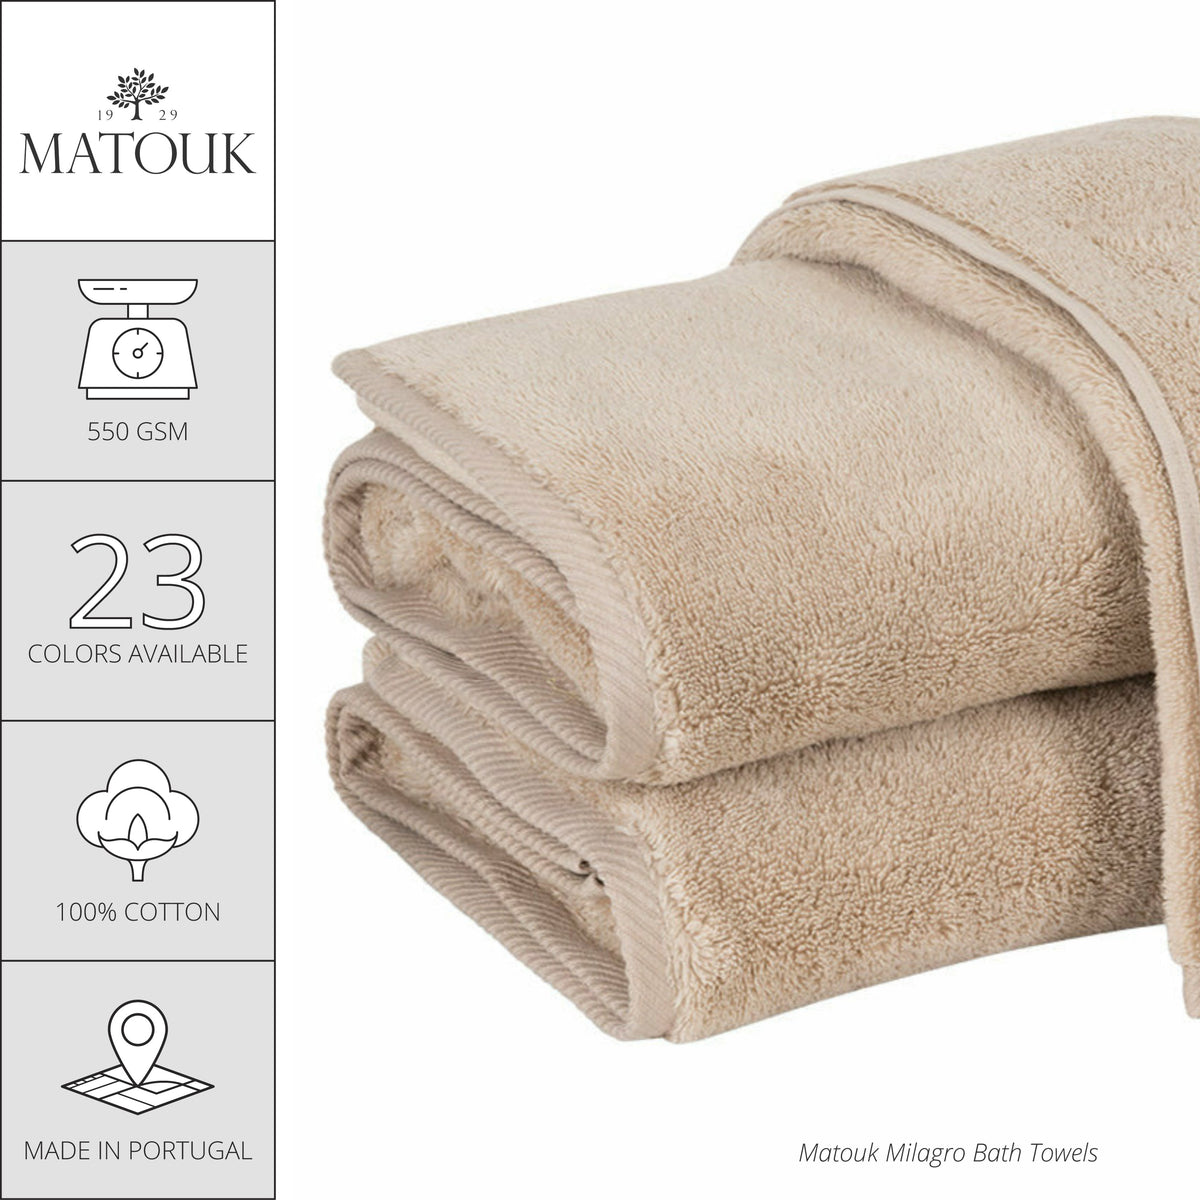 Matouk Milagro Bath Towels and Mats - Pool